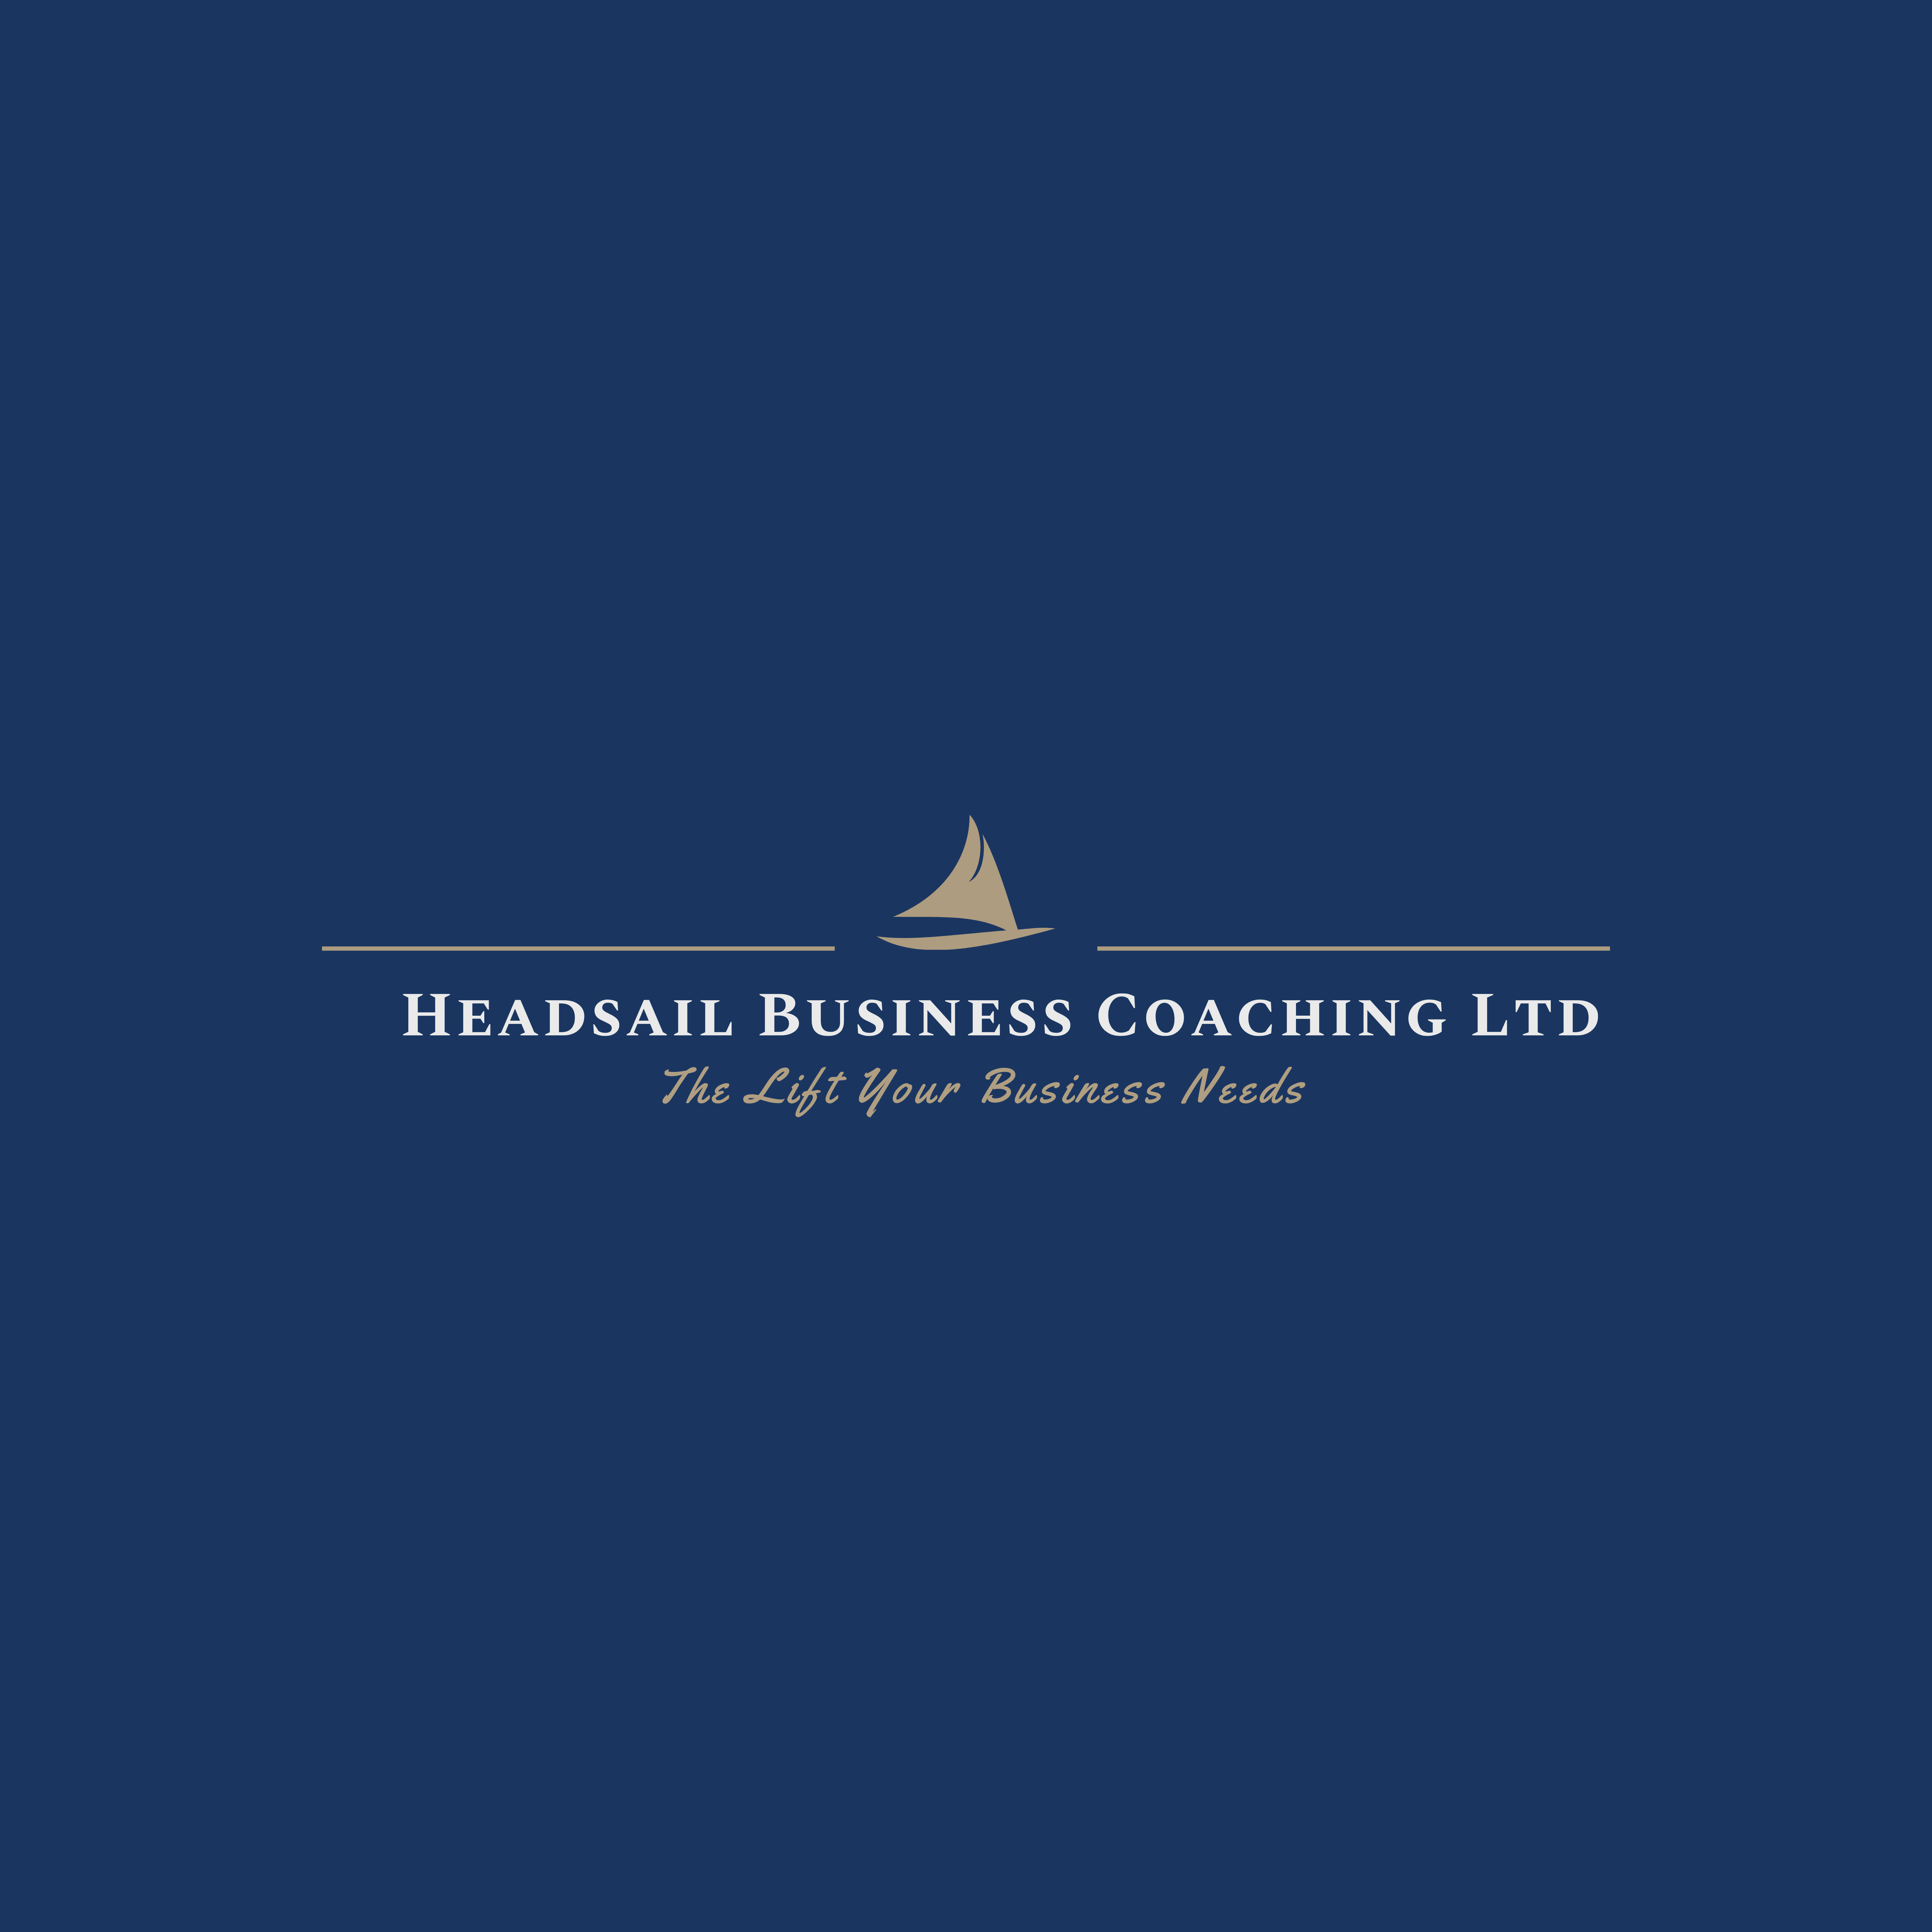 Headsail Business Coaching Ltd